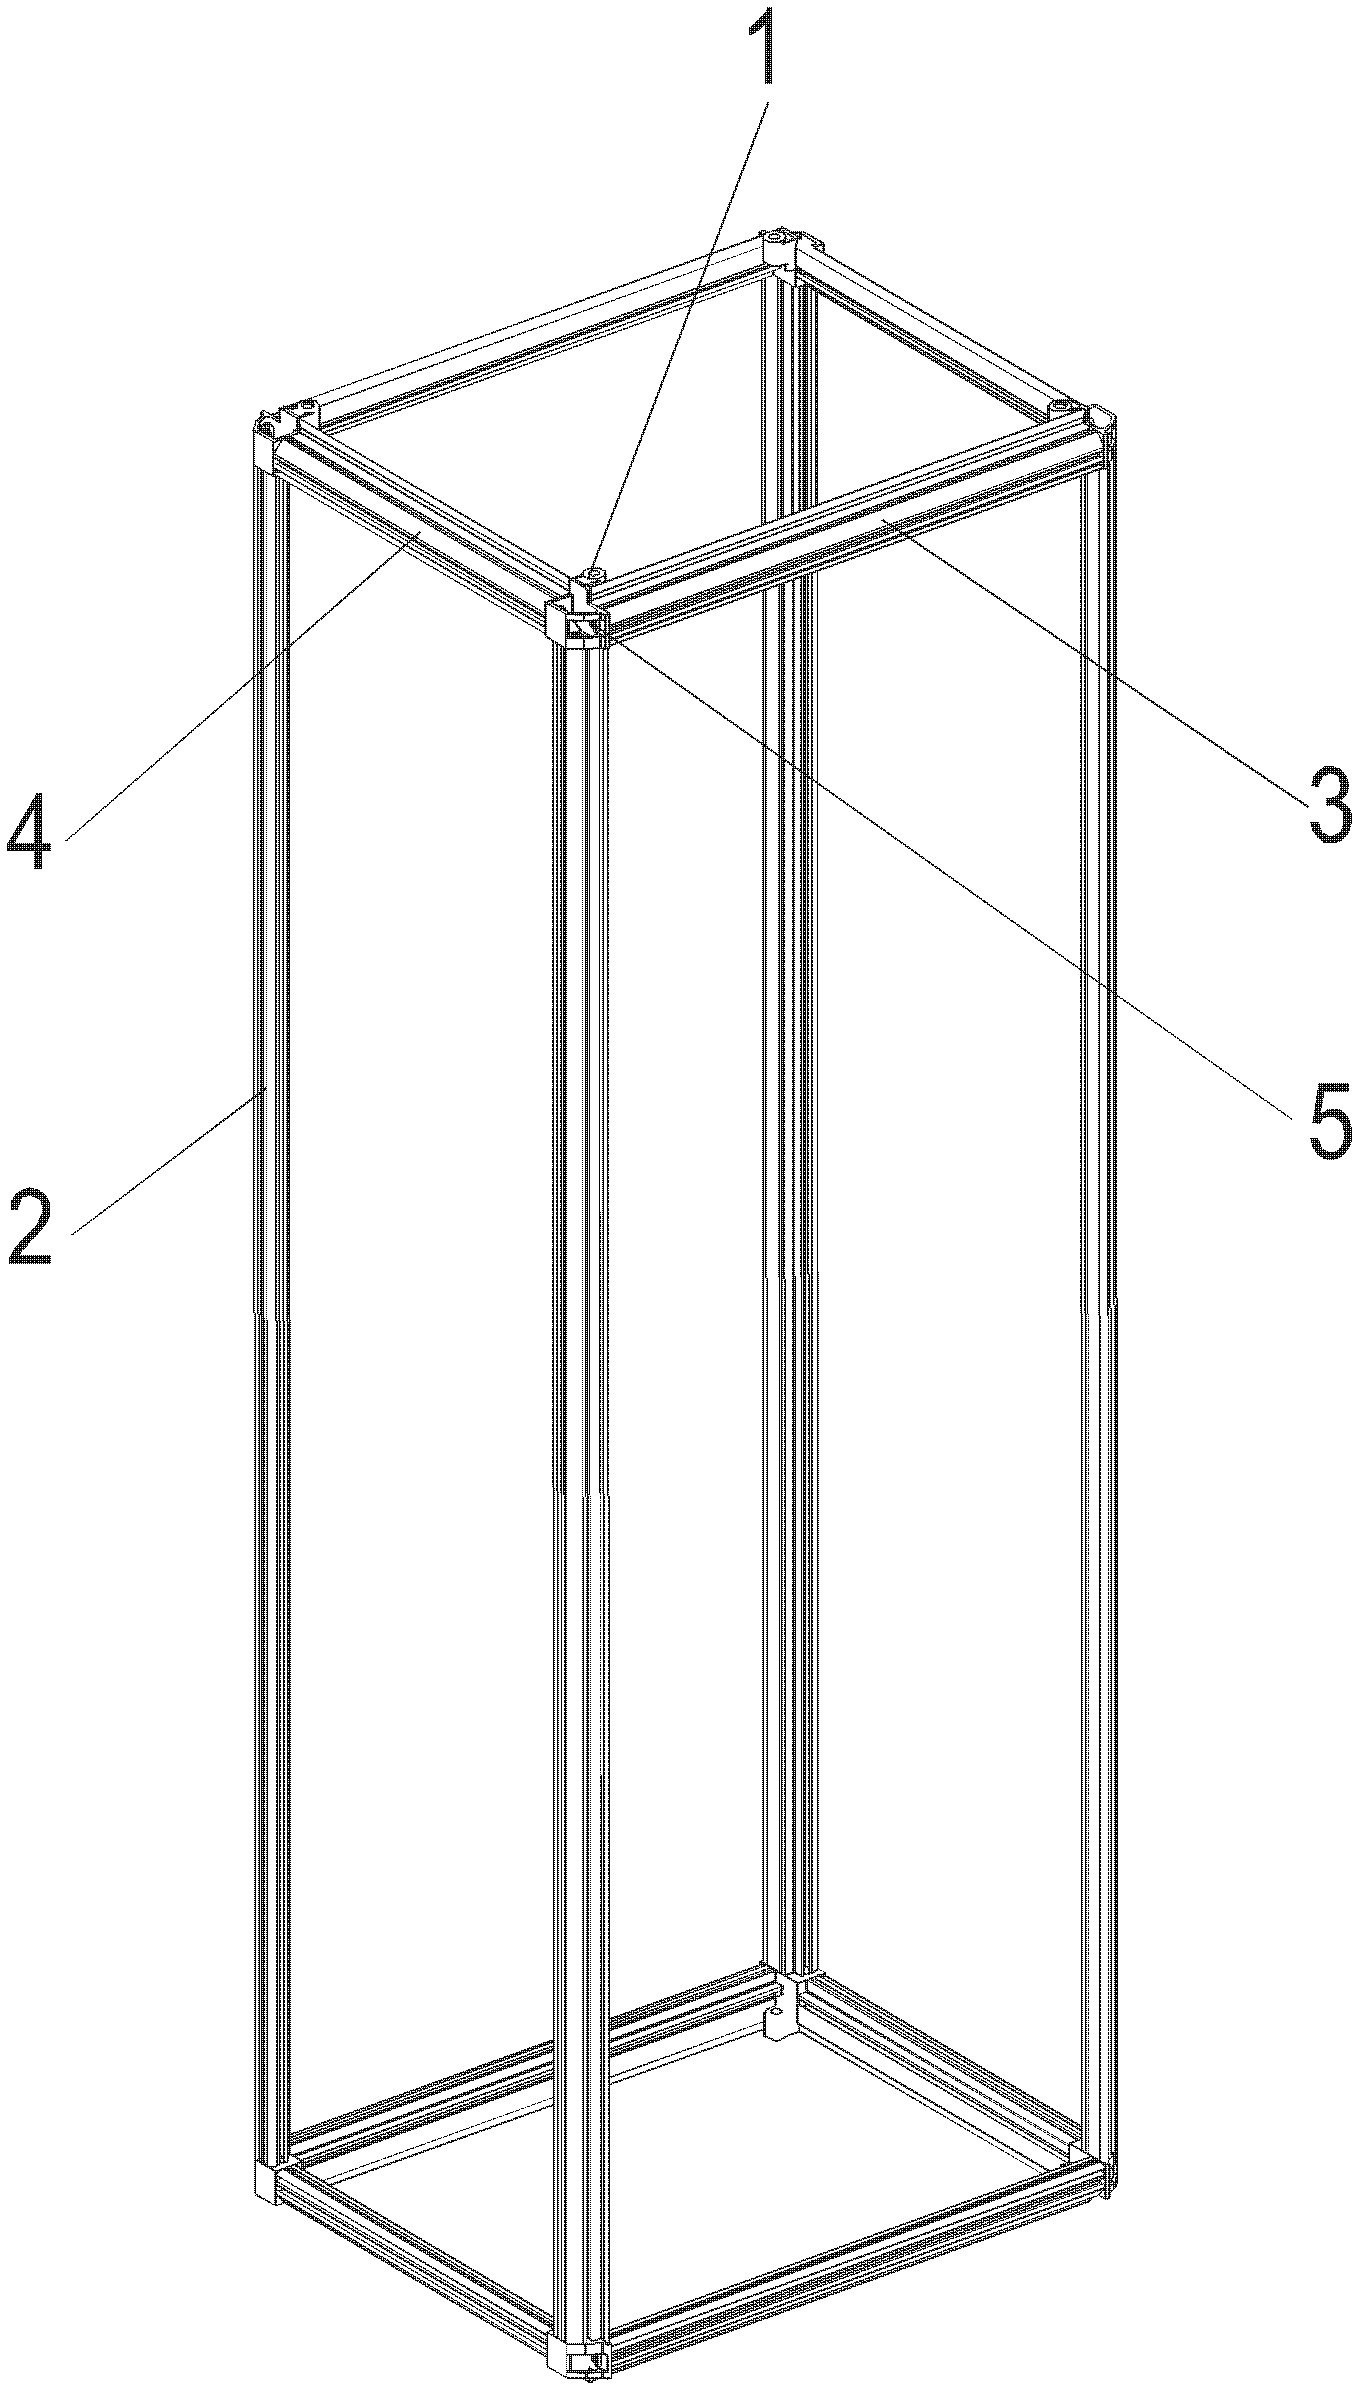 A combined aluminum profile cabinet frame